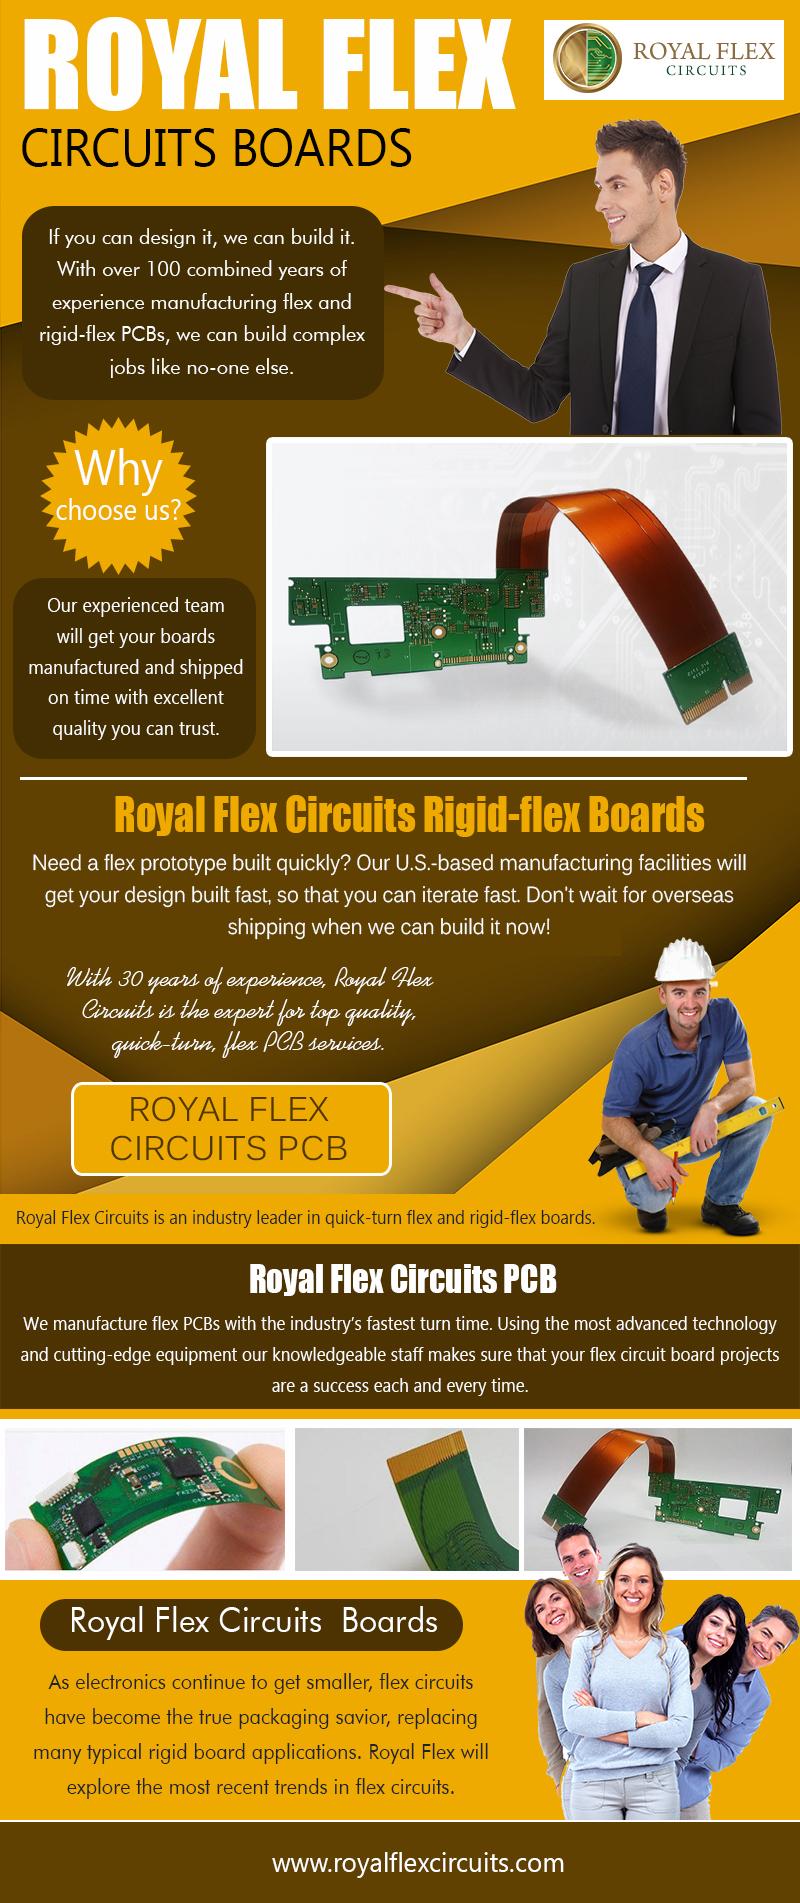 Flex Circuits PCB|http://www.royalflexcircuits.com/